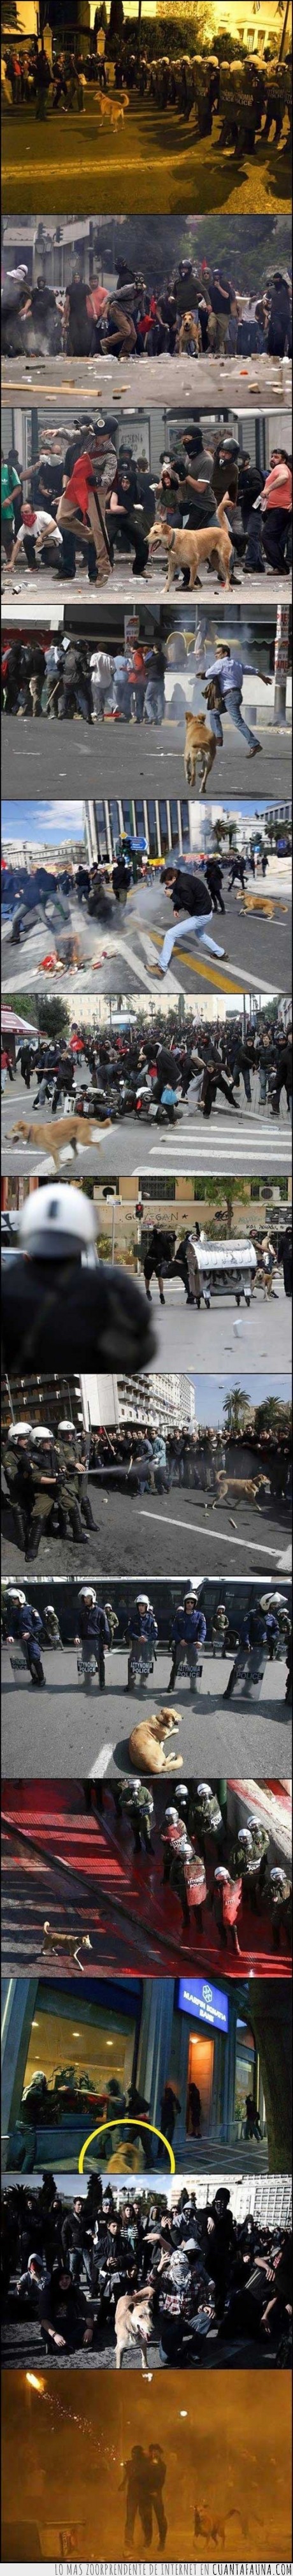 policia,riot dog,perro,cojones,huevos,protesta